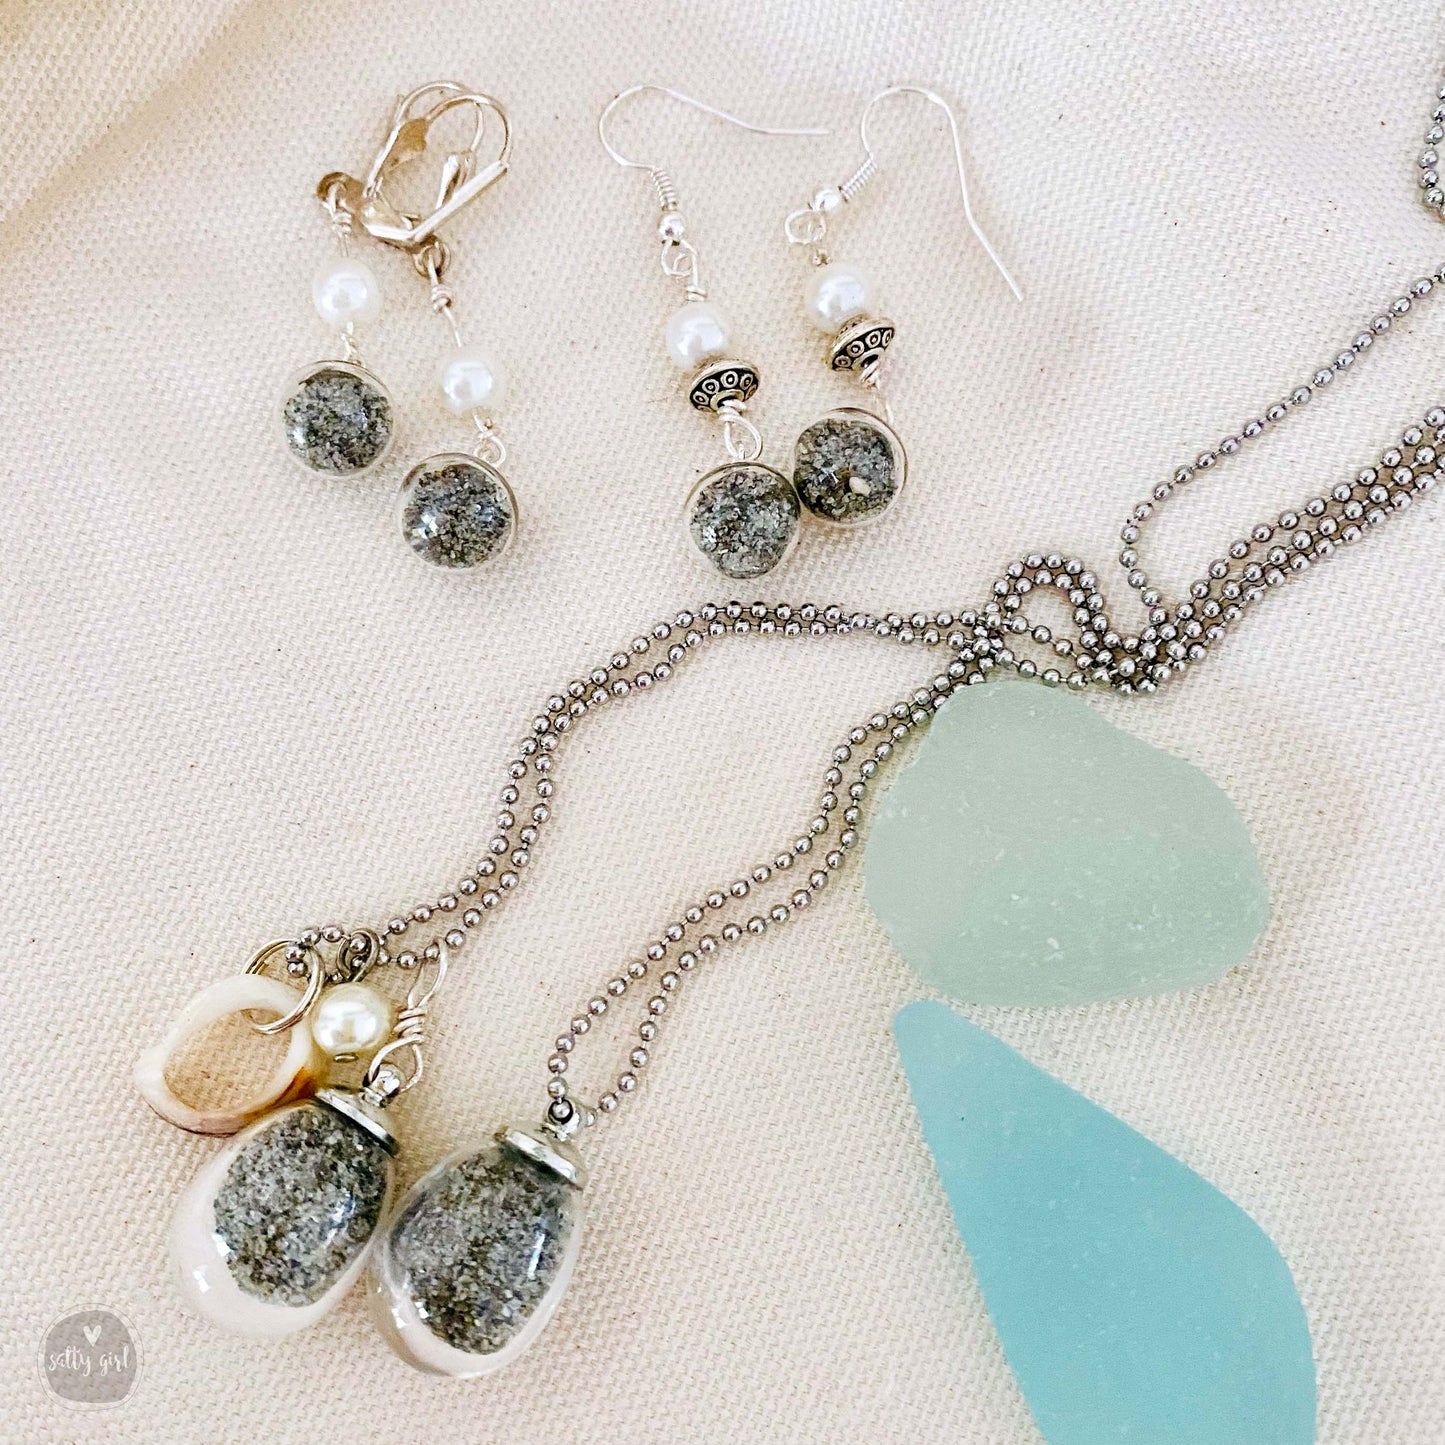 Beach Sand Jewelry - Maine Beach Sand Necklace & Earrings